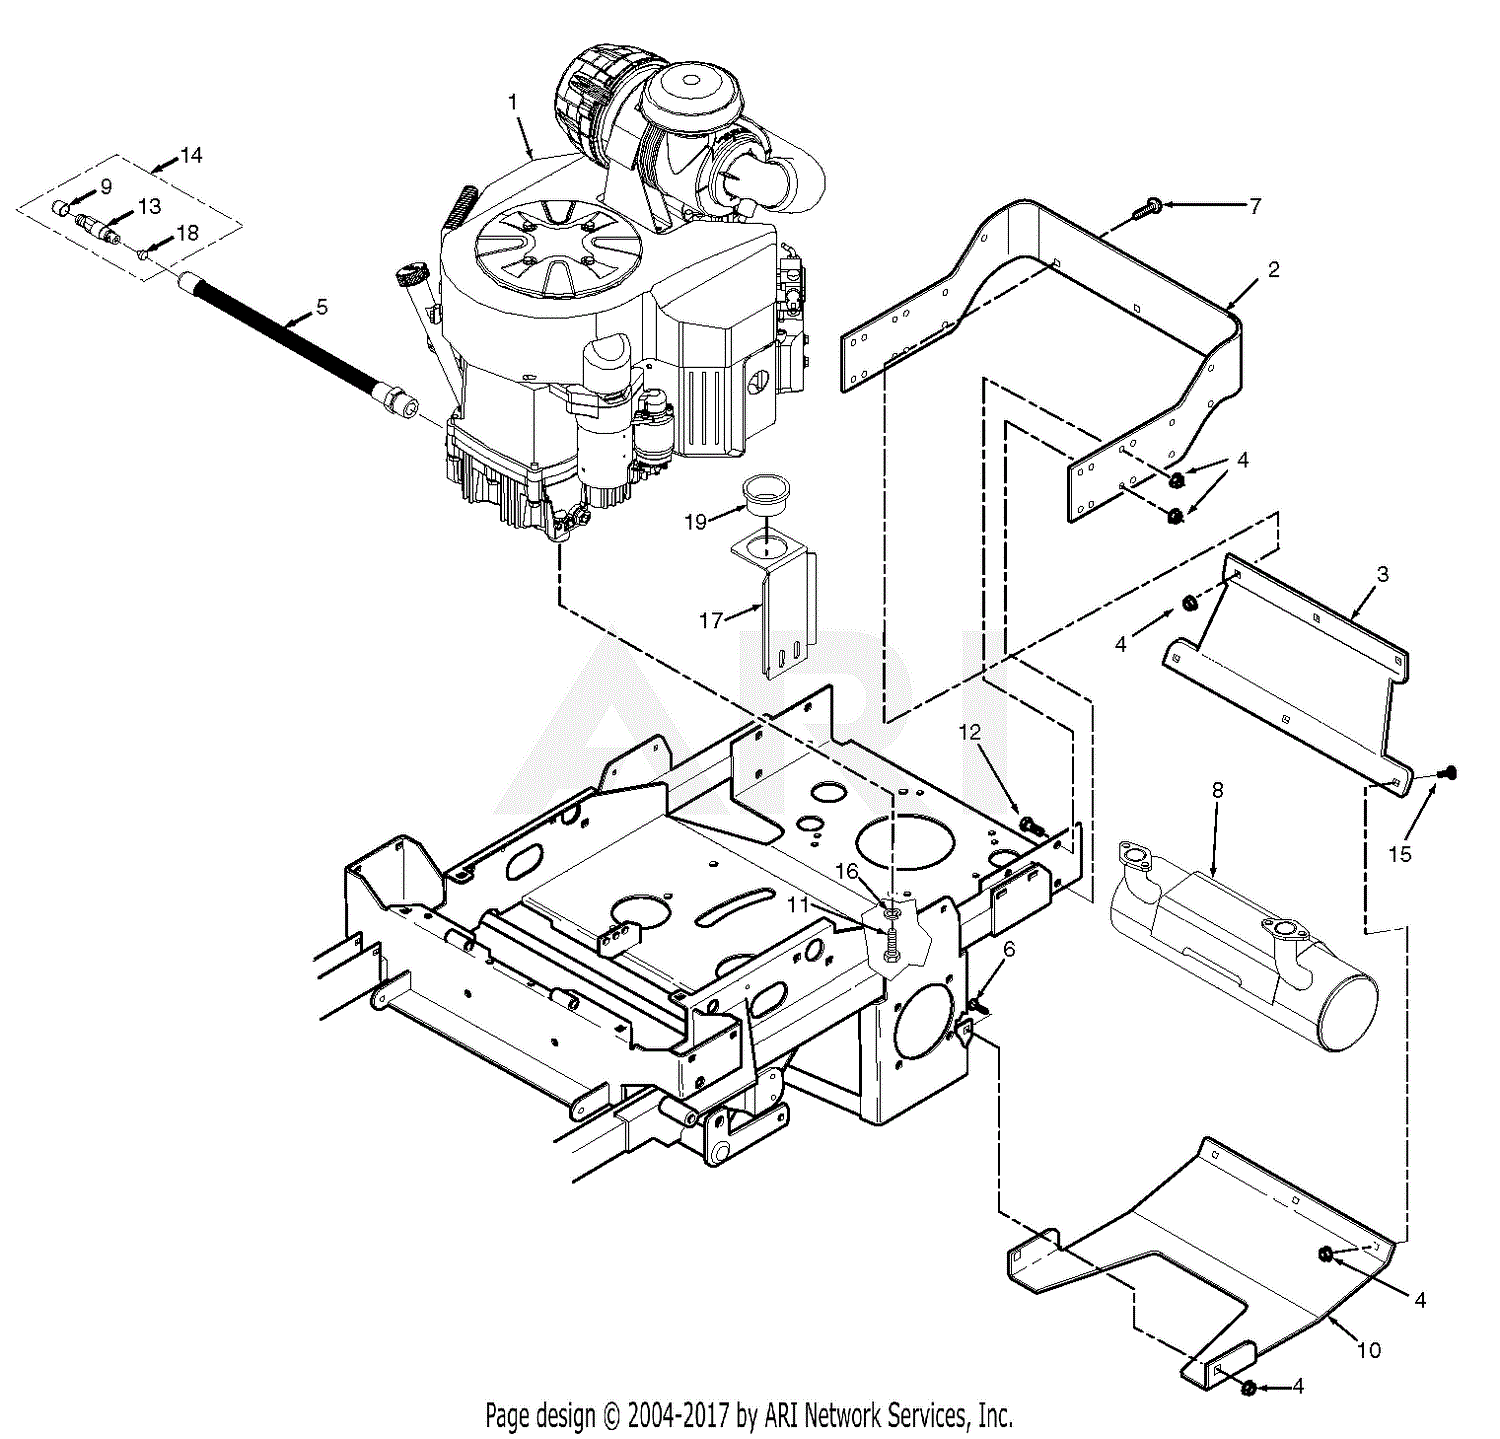 Wiring Manual PDF: 13 Cat Engine Diagram